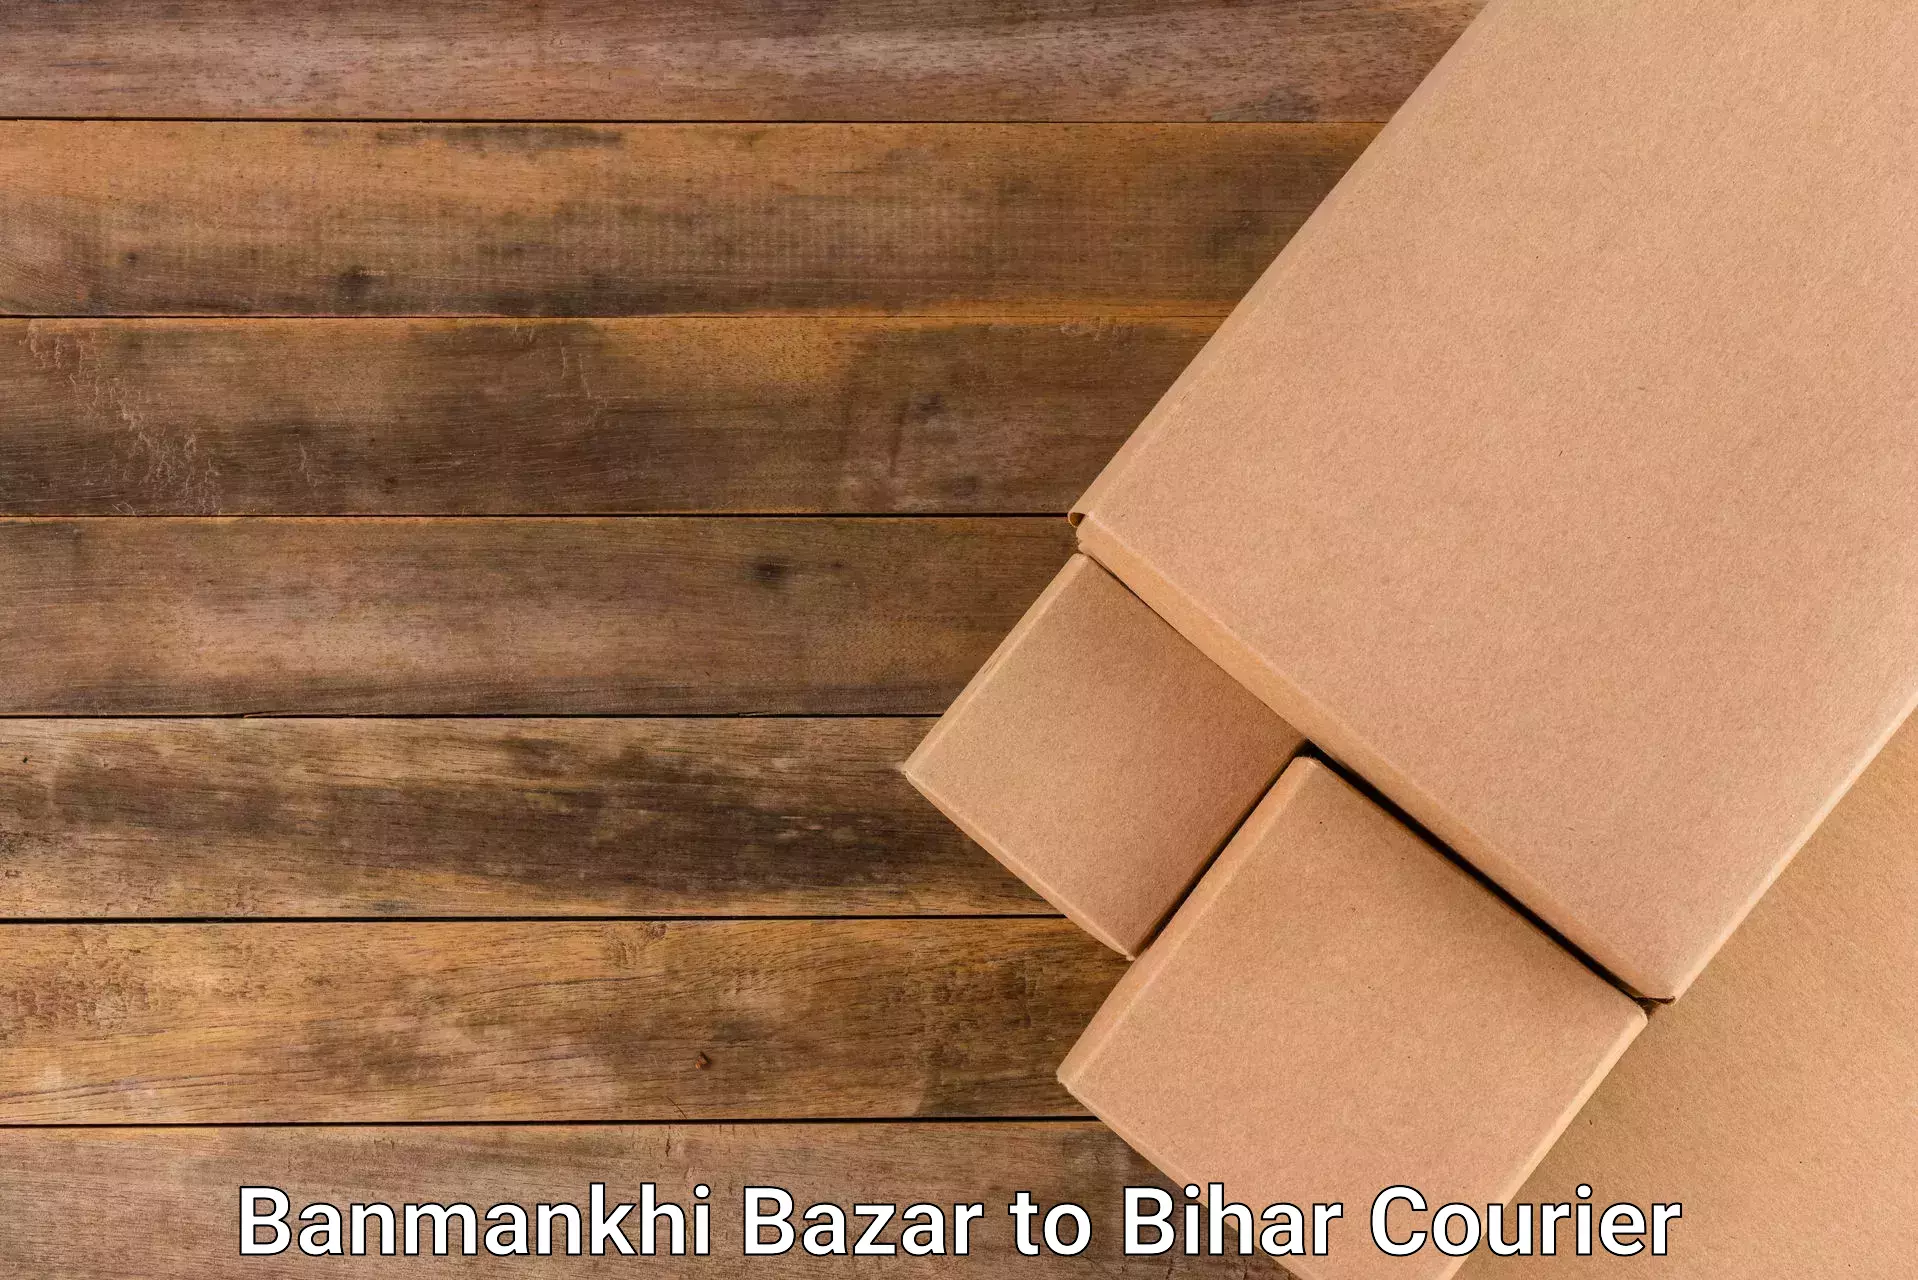 Courier service innovation Banmankhi Bazar to Nawada